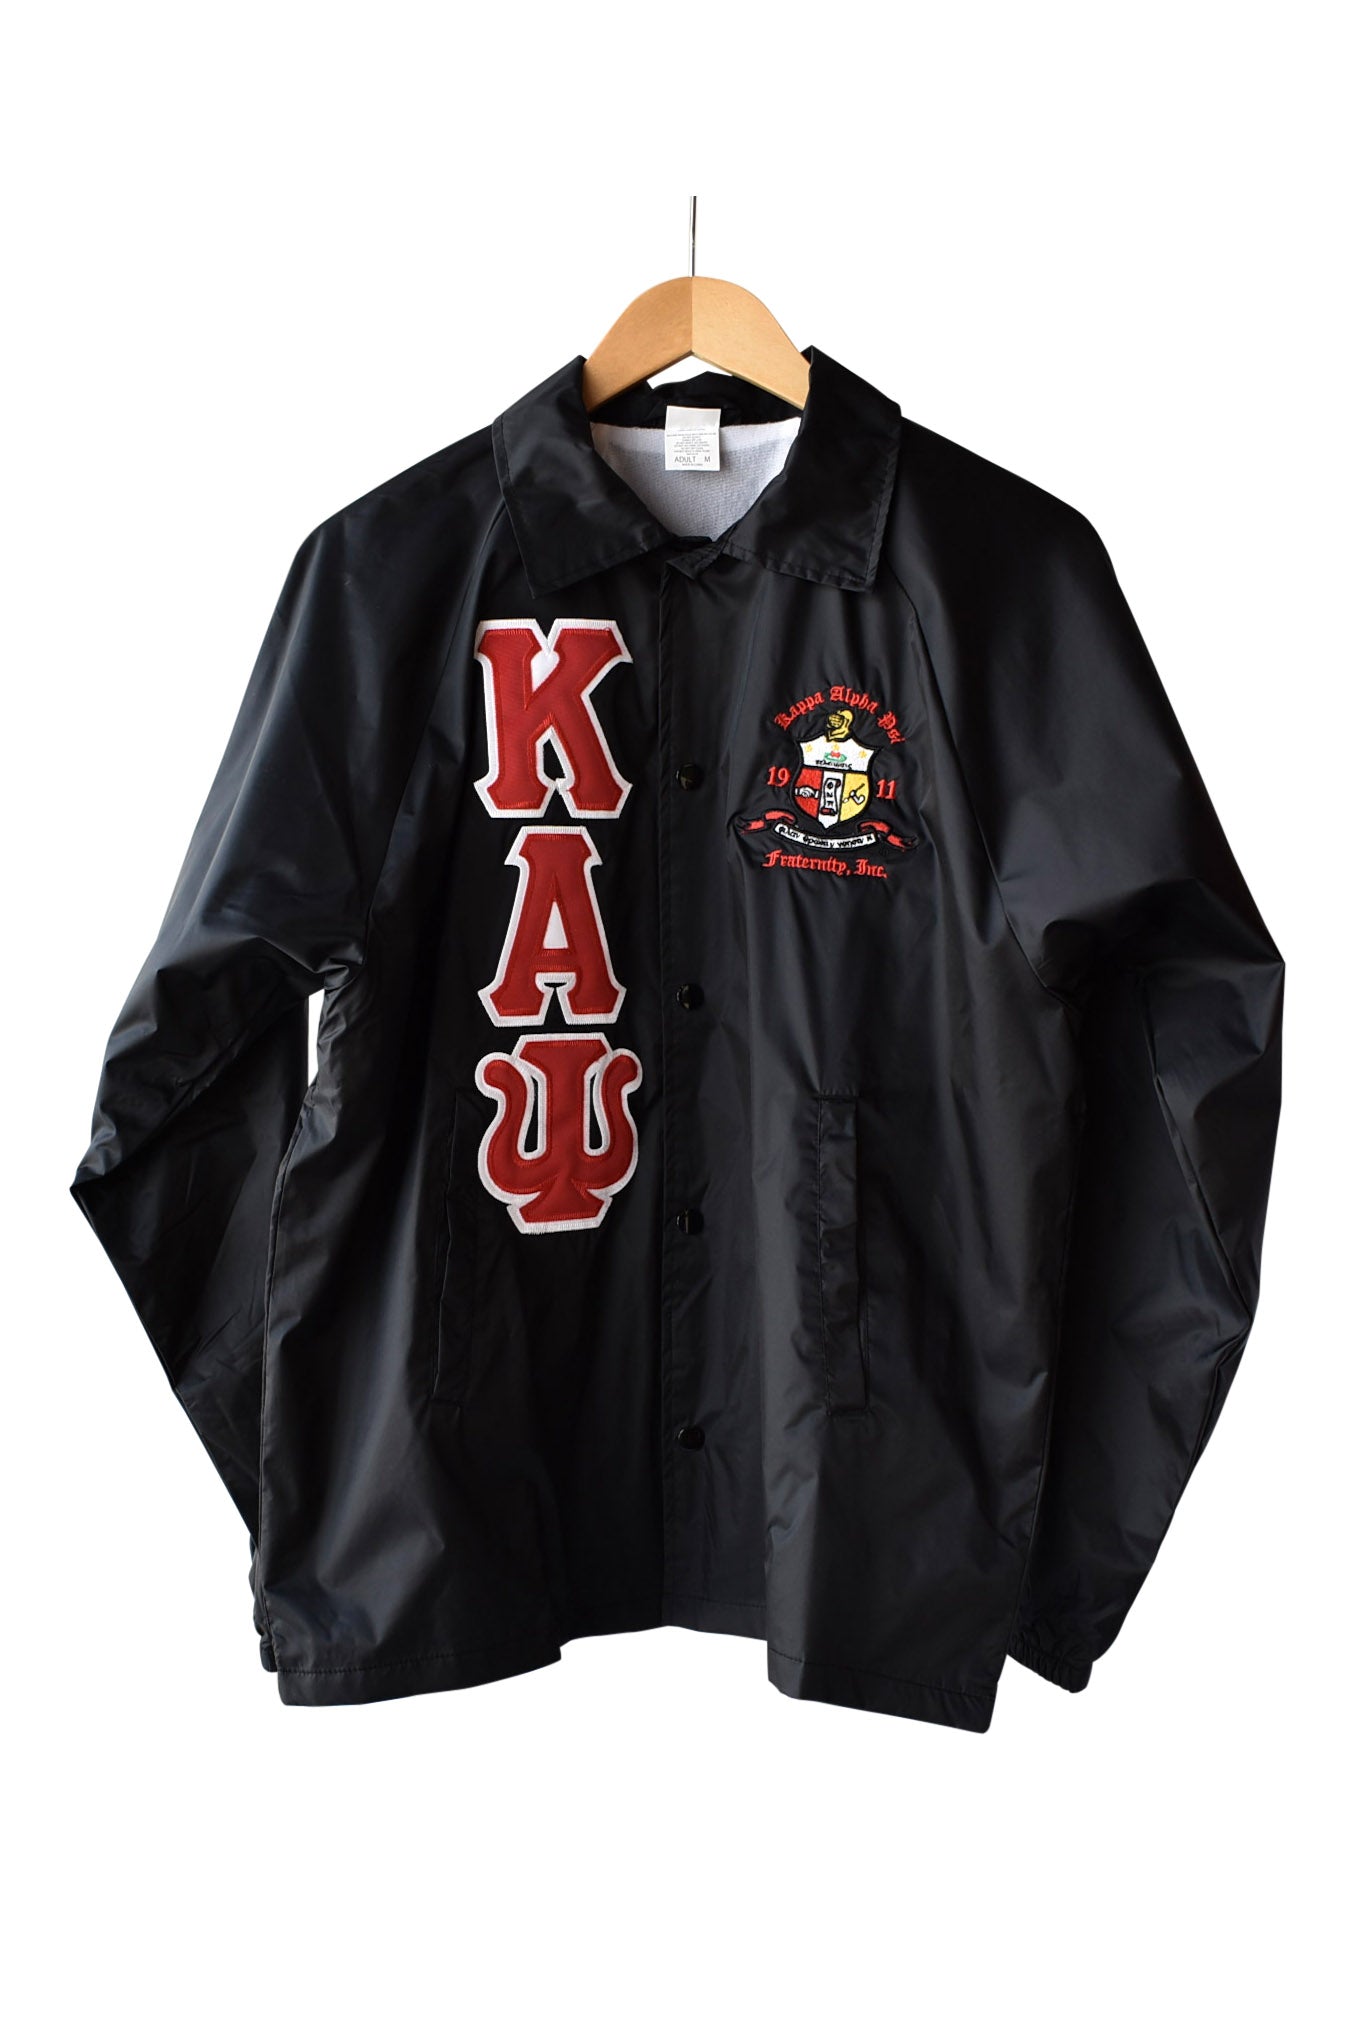 Kappa Alpha Psi Fraternity Line Jacket Kappa Alpha Psi Red Line Jacket 1911